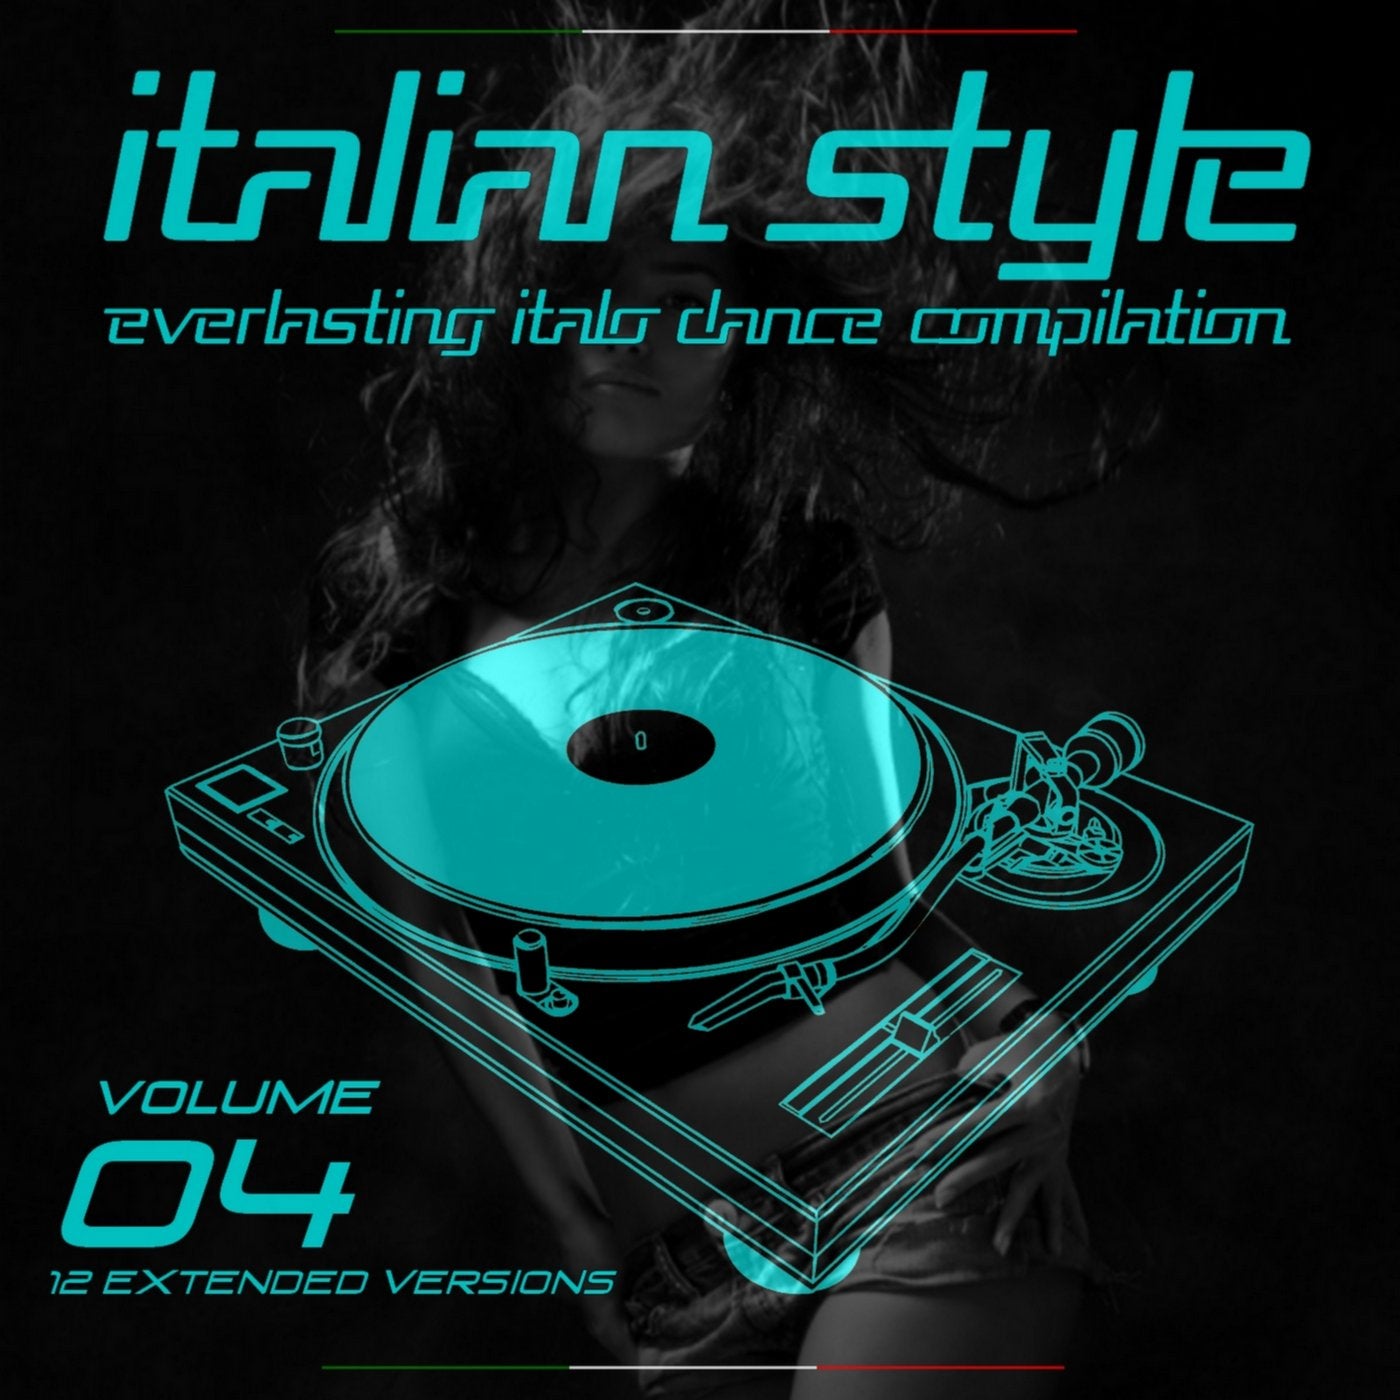 New new extended mix. Italian Style Everlasting Italo Dance Compilation [02] обложки. New Italo Disco BCR Full Remix. Italo Disco New Generation. Italian Style Extended Vocal Mix.